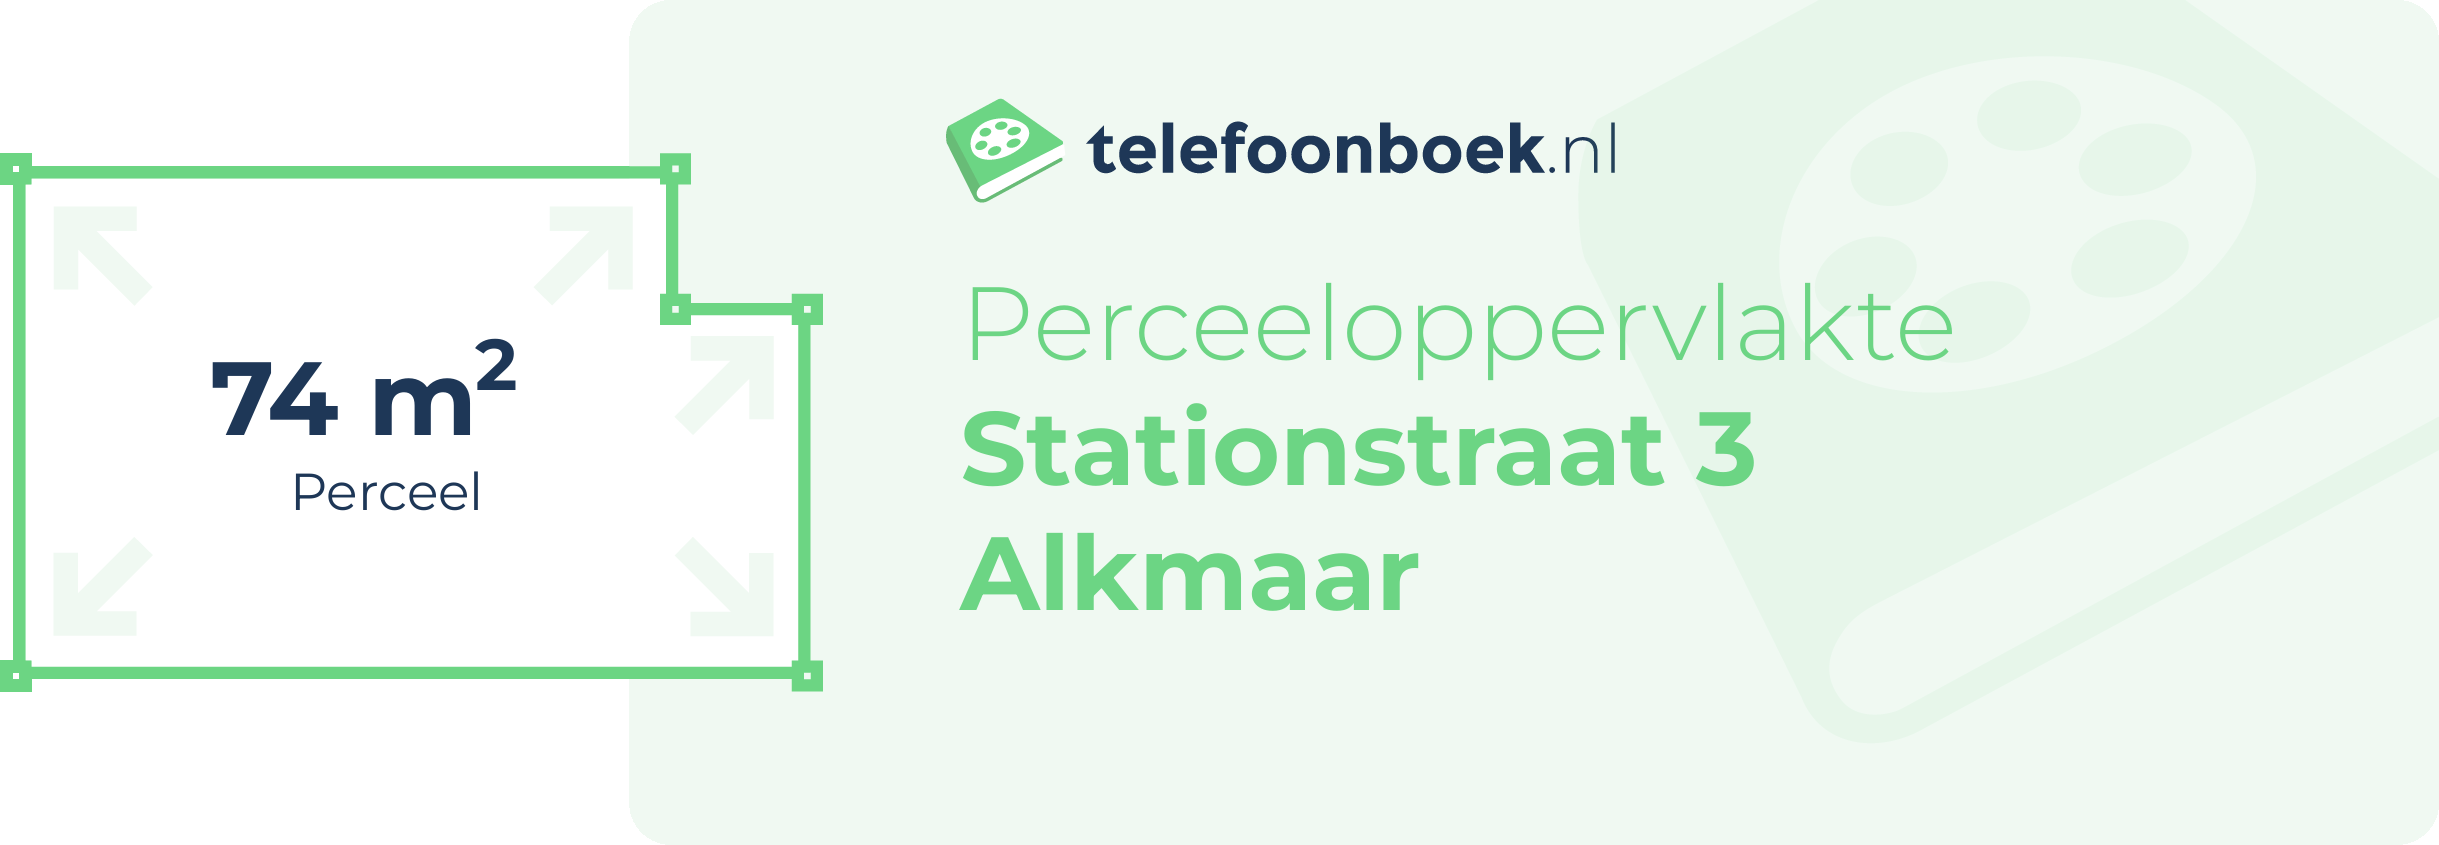 Perceeloppervlakte Stationstraat 3 Alkmaar